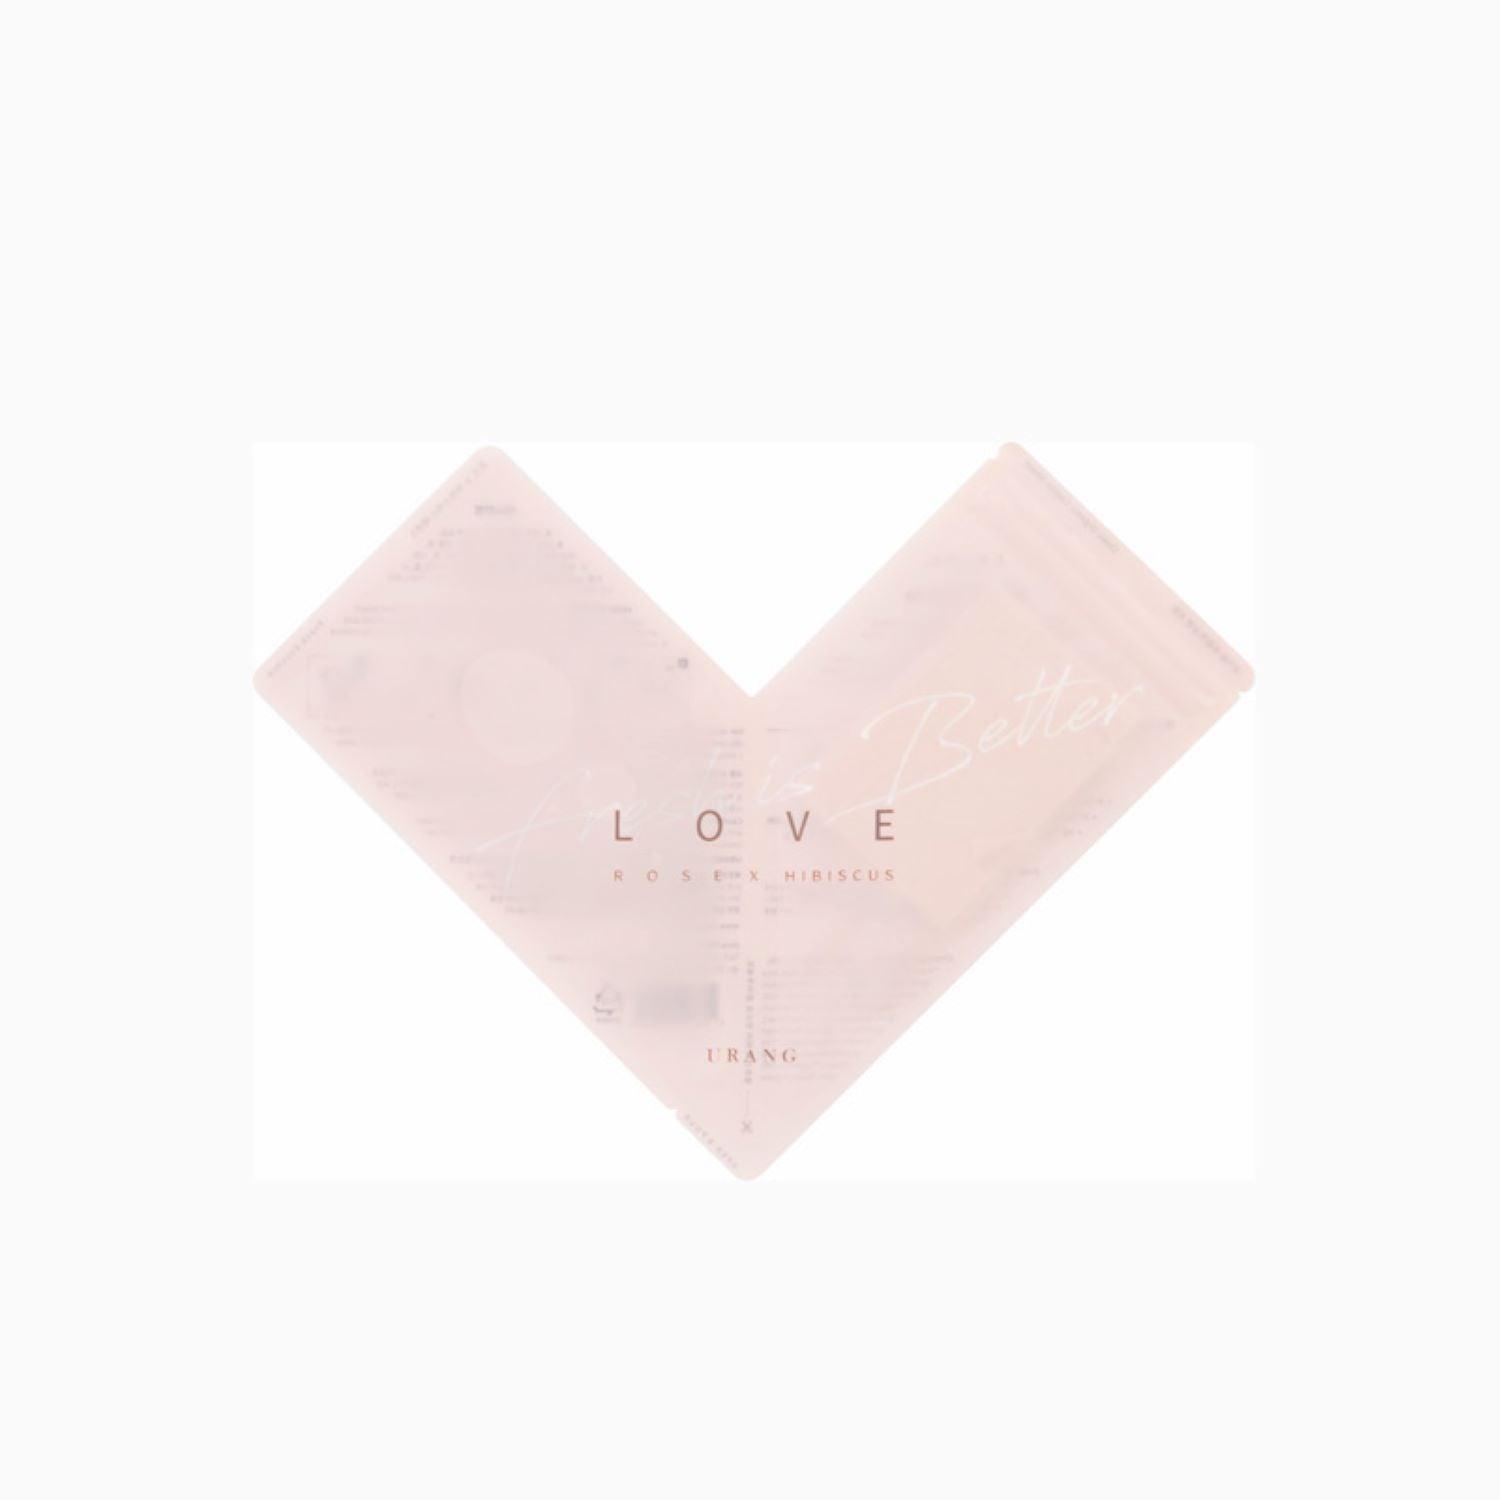 Urang Love Rose X Hibiscus Mask - 5pcs Per Box - Beauty Ethic